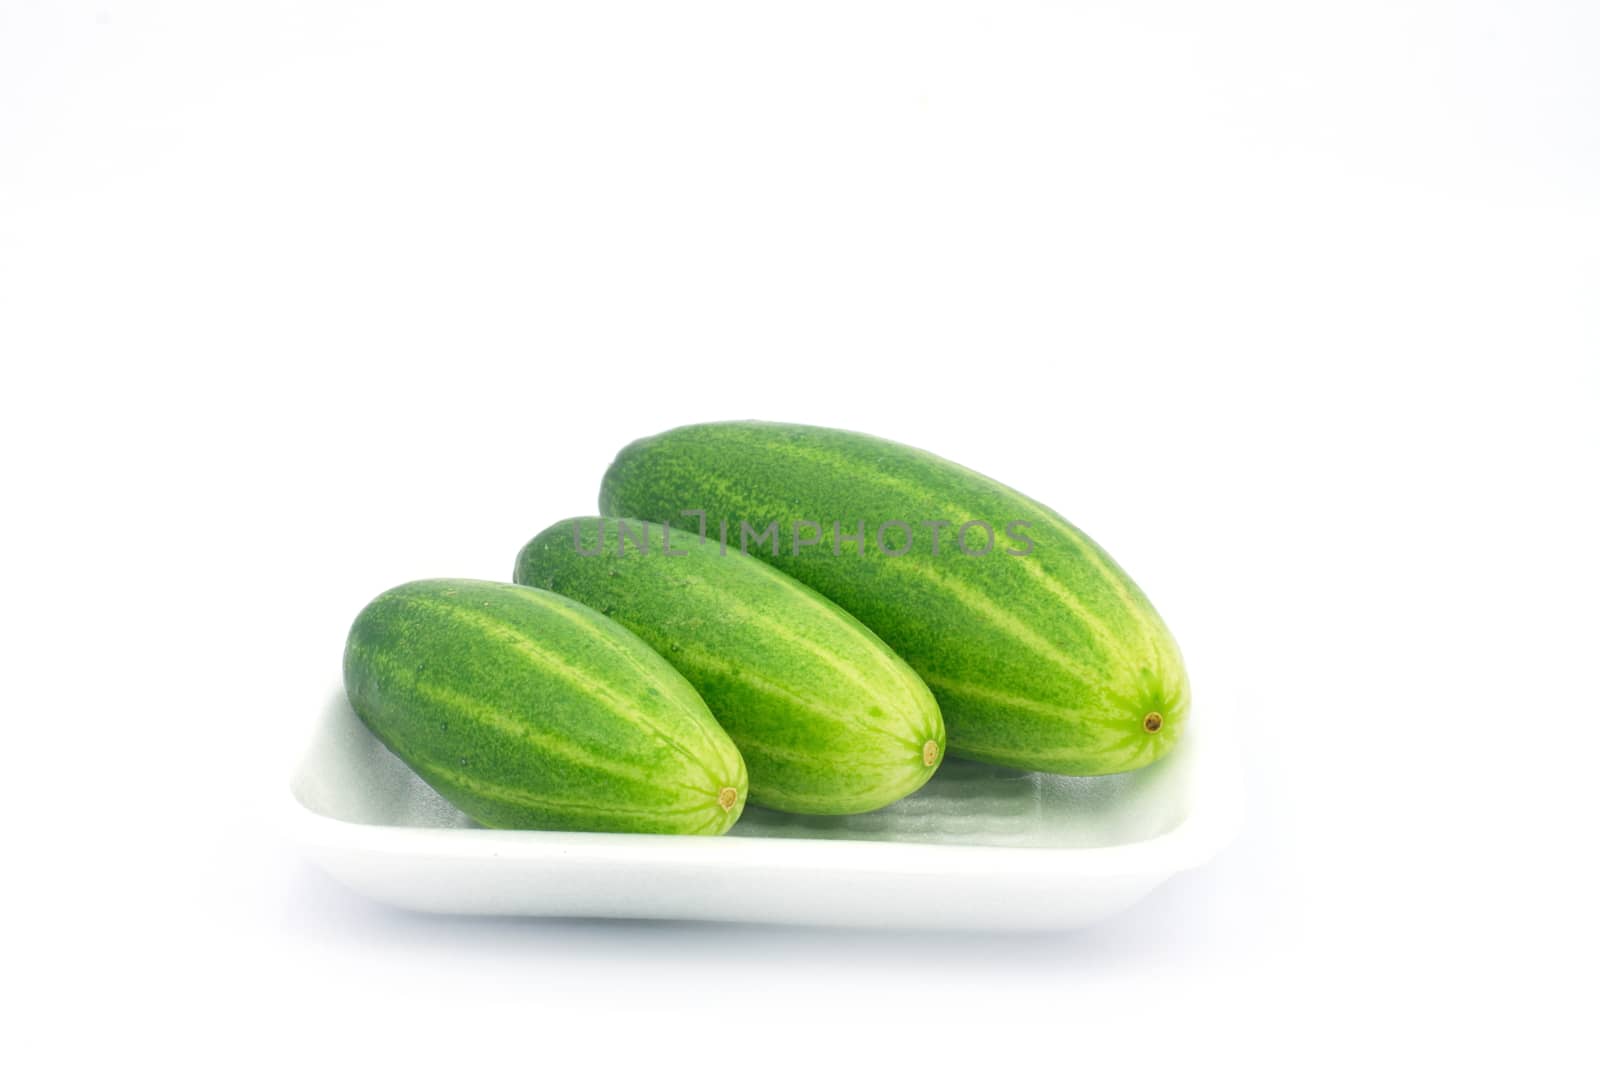 green cucumber in foam sheet on isolate white background by ninelittle